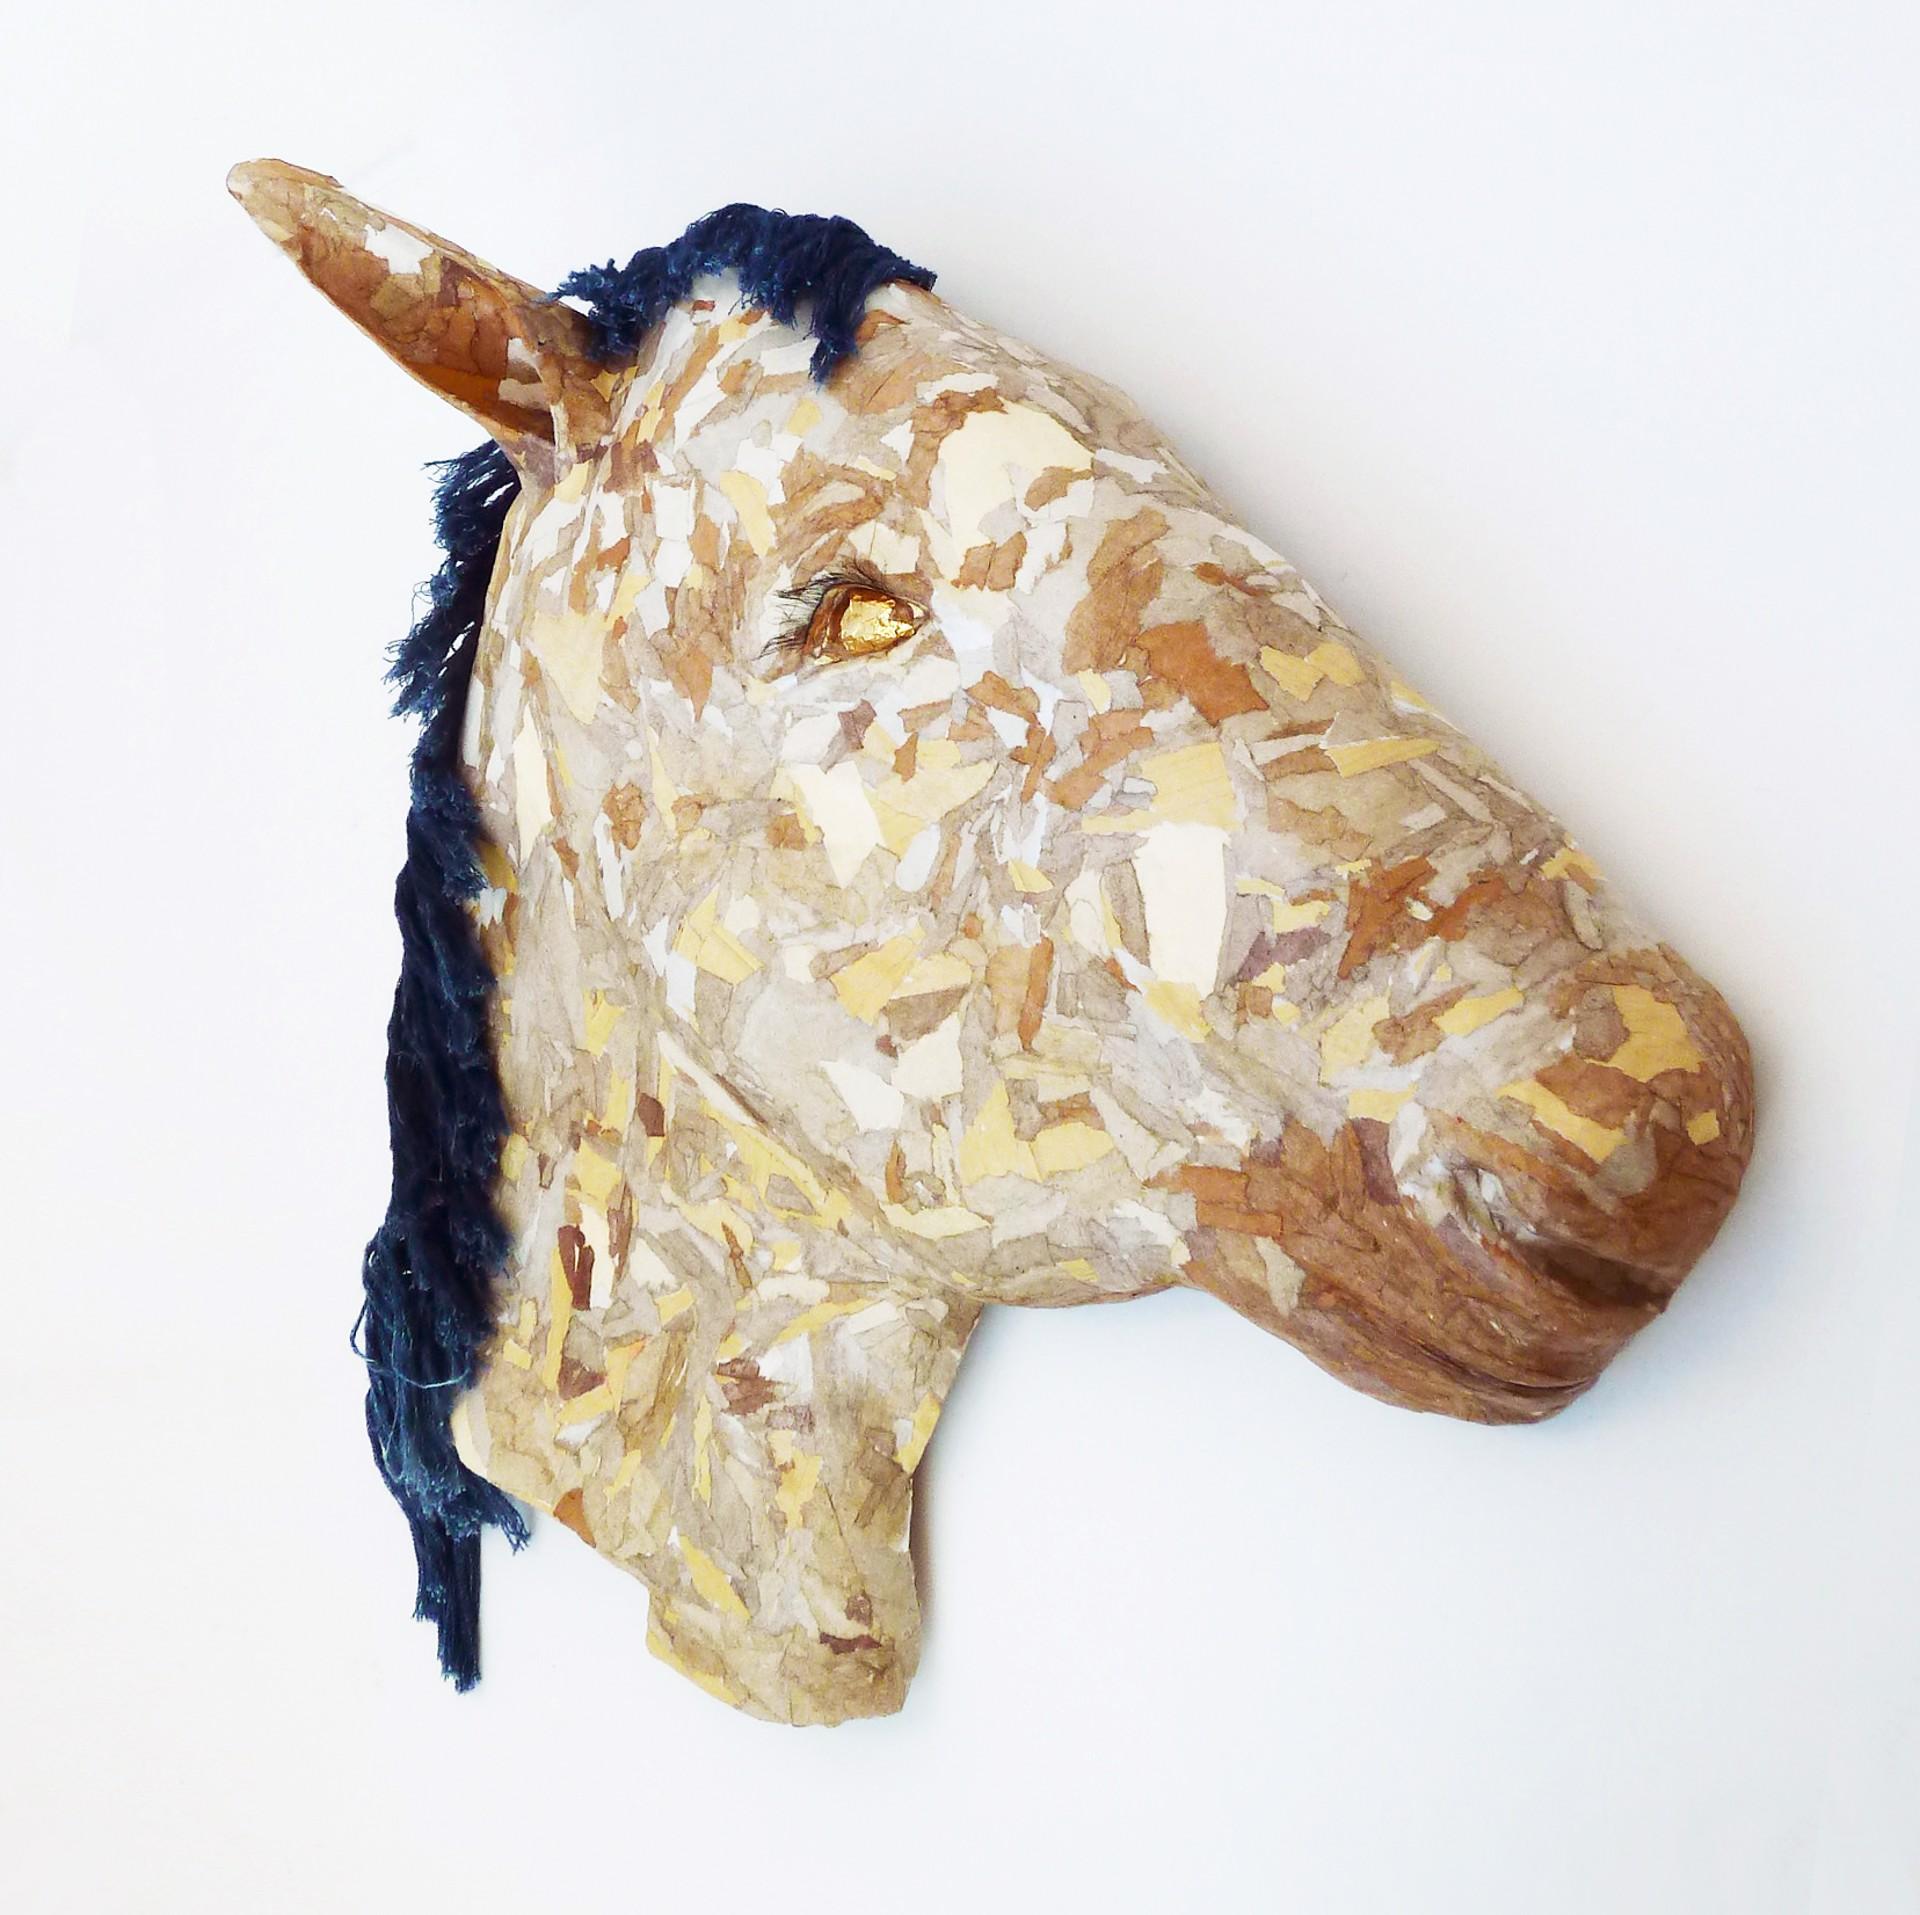 Appaloosa Horse - Incredible Contemporary Wall Sculpture (Tan, Gold, and Blue)  - Mixed Media Art by Yulia Shtern